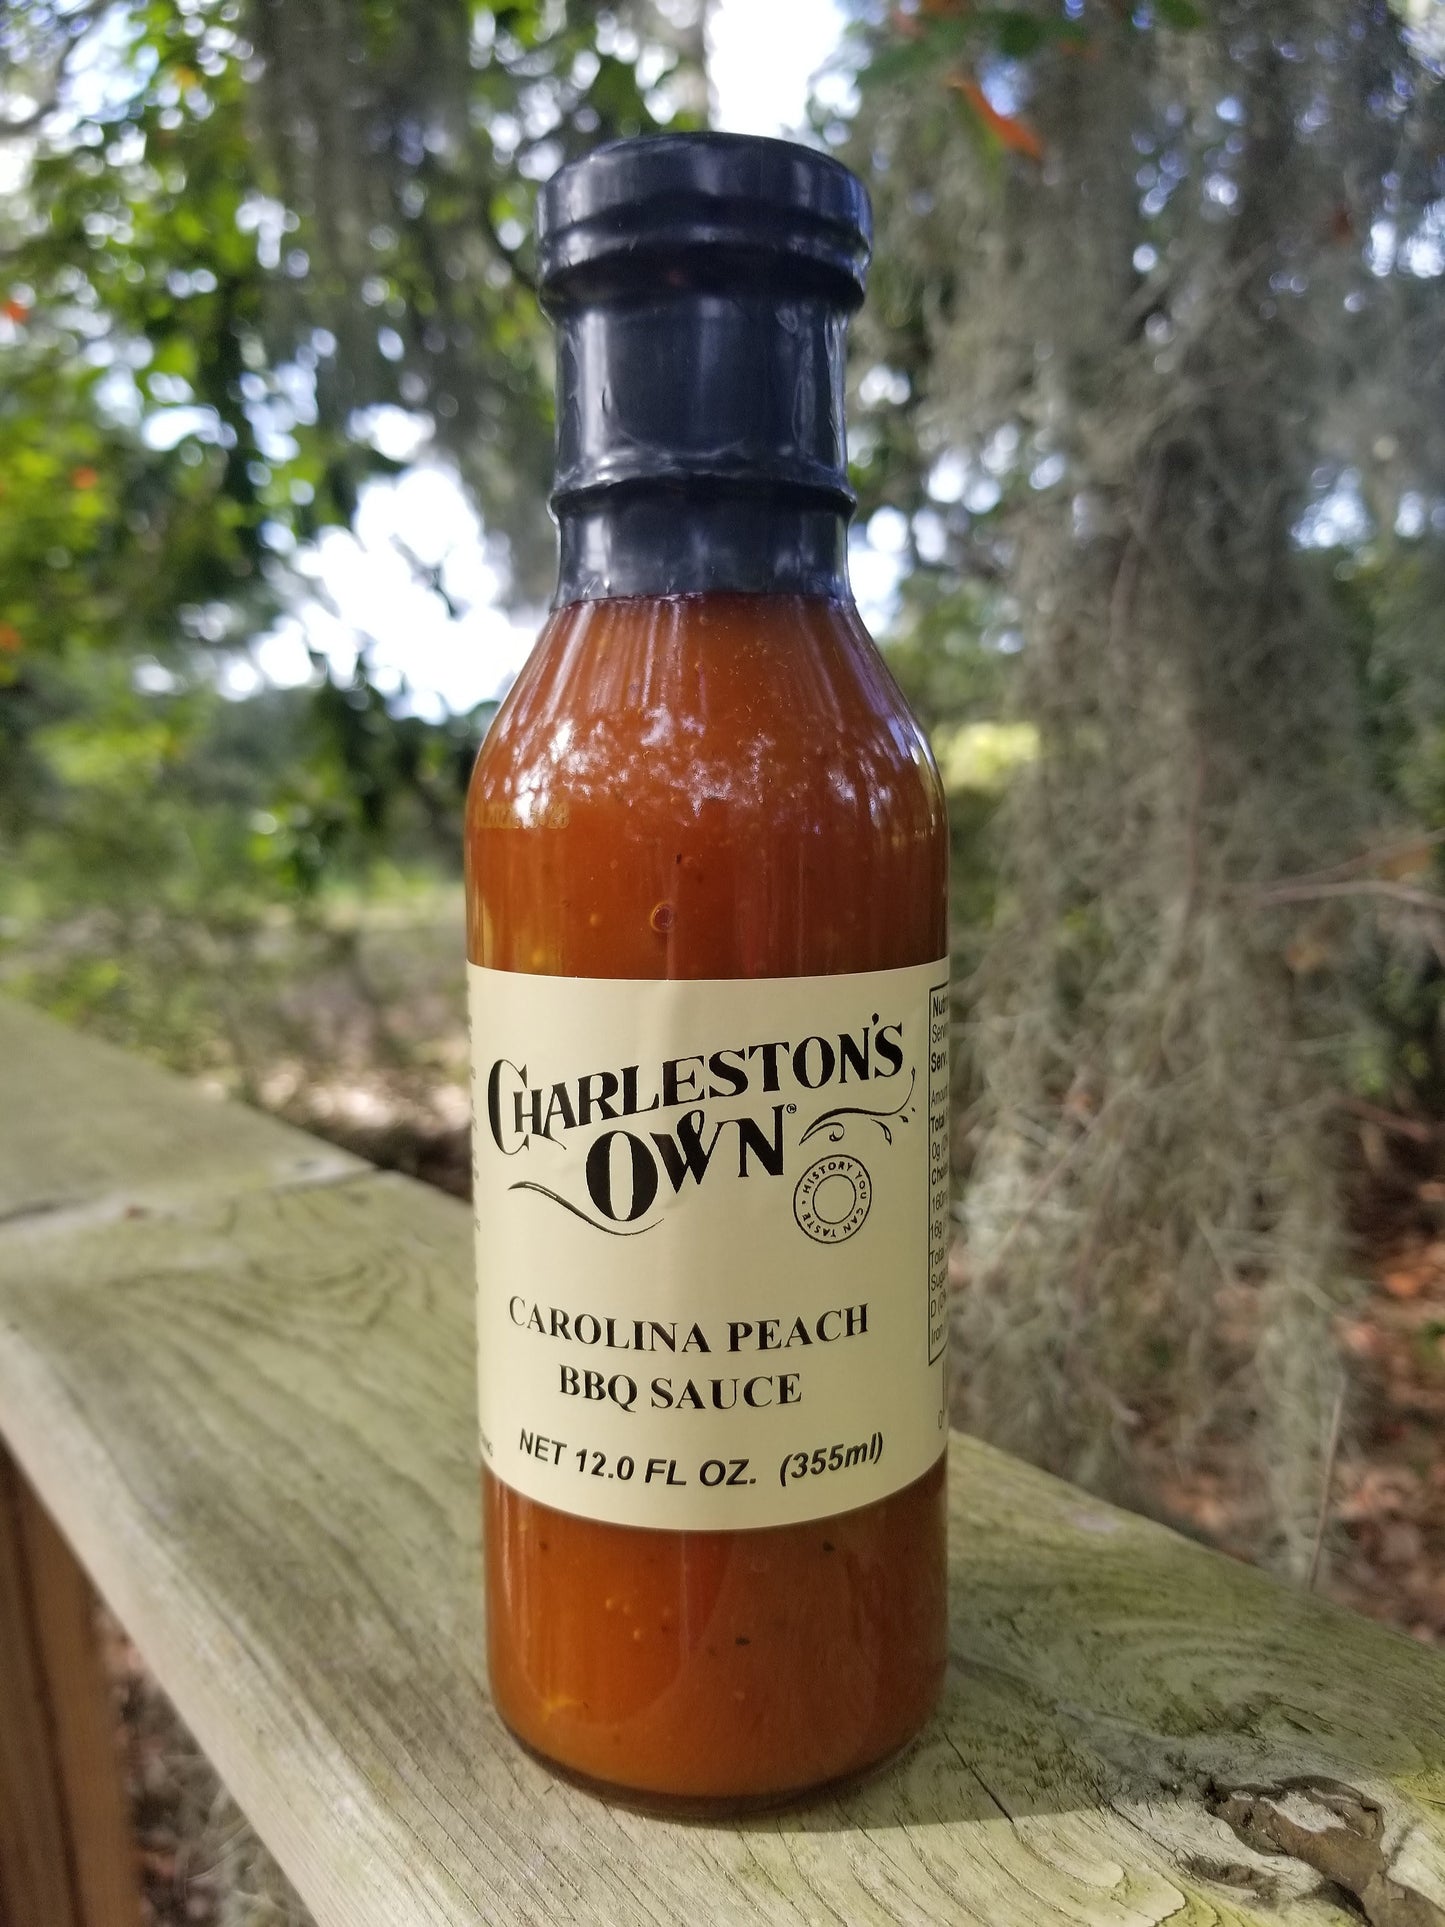 Charleston's Own Carolina Peach BBQ Sauce